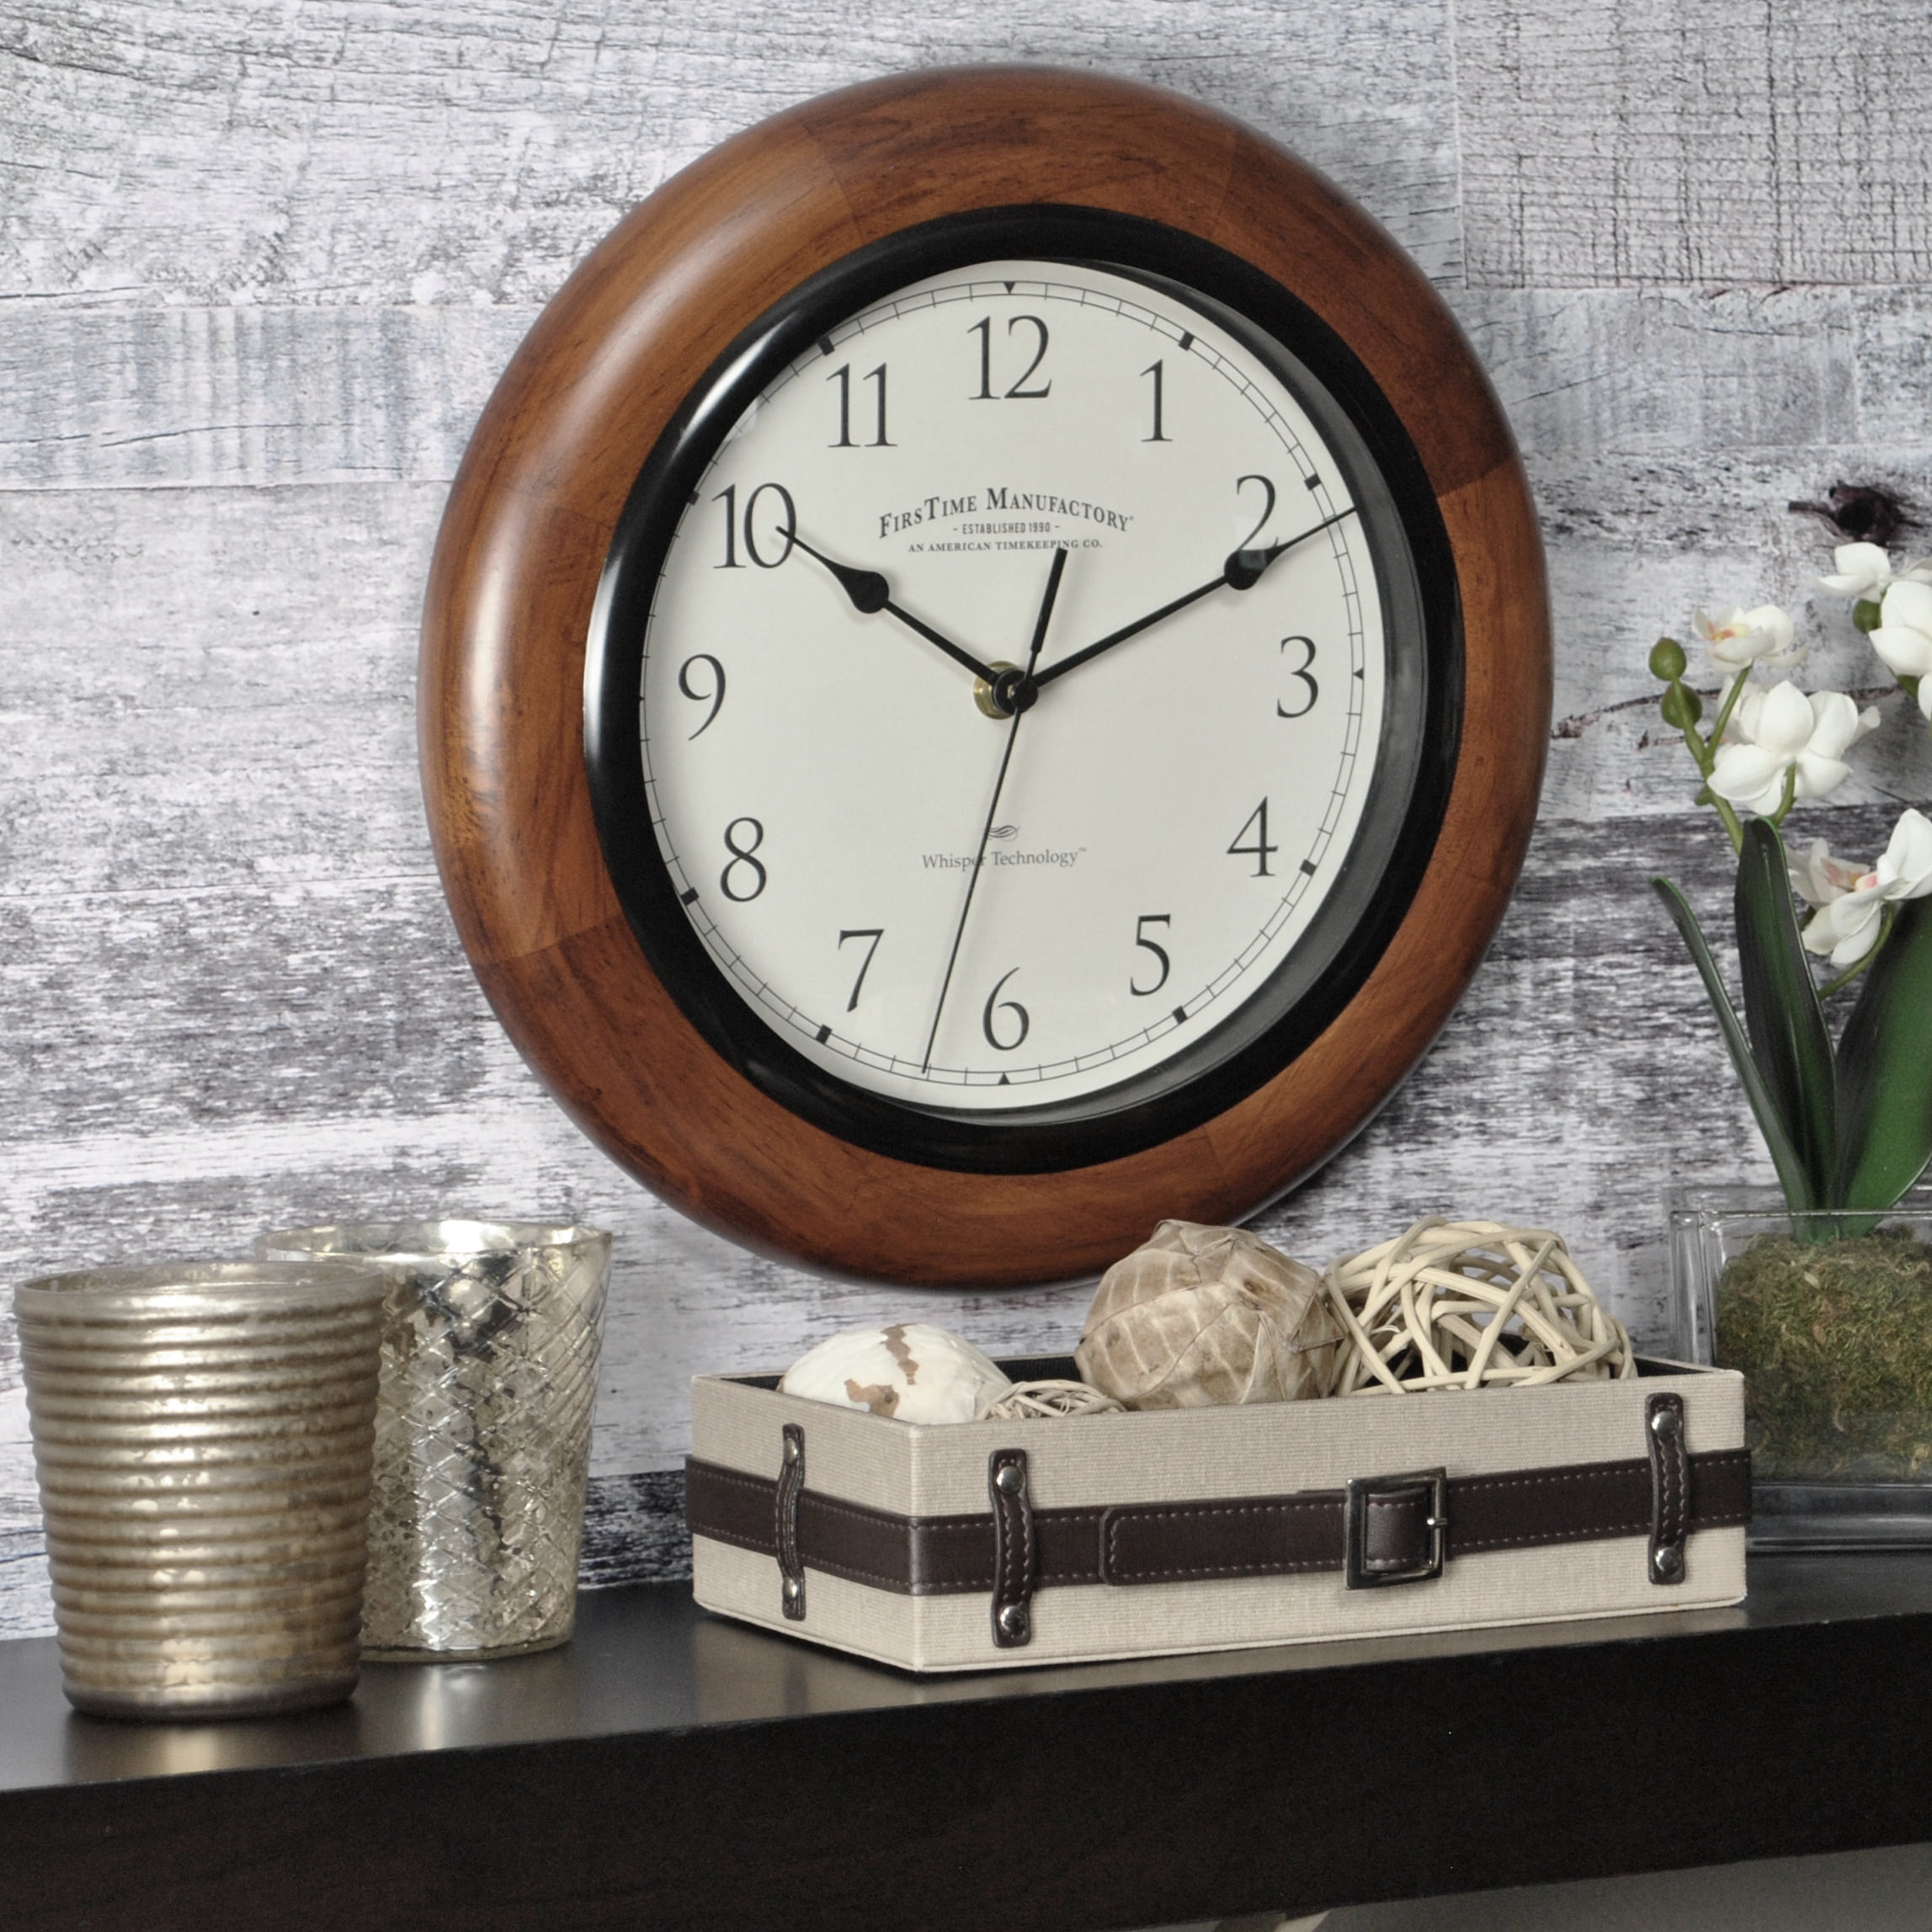 JIAJIA Simple and Stylish Wall Clock Mute Creative Quartz Clock Mint Green 12 Inches